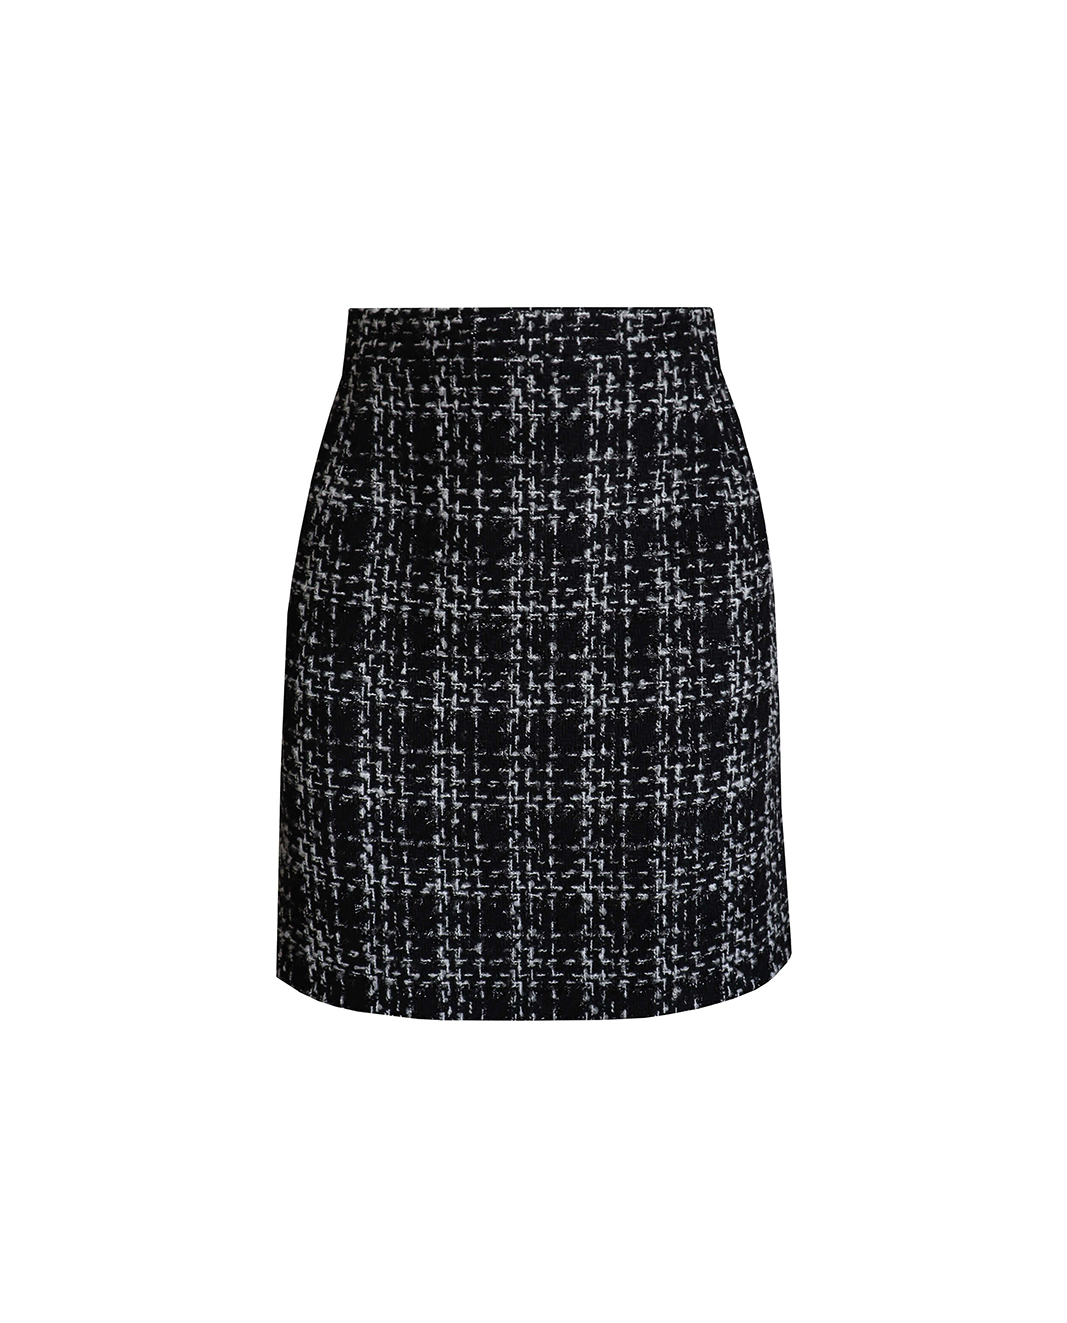 tweed skirt black and white